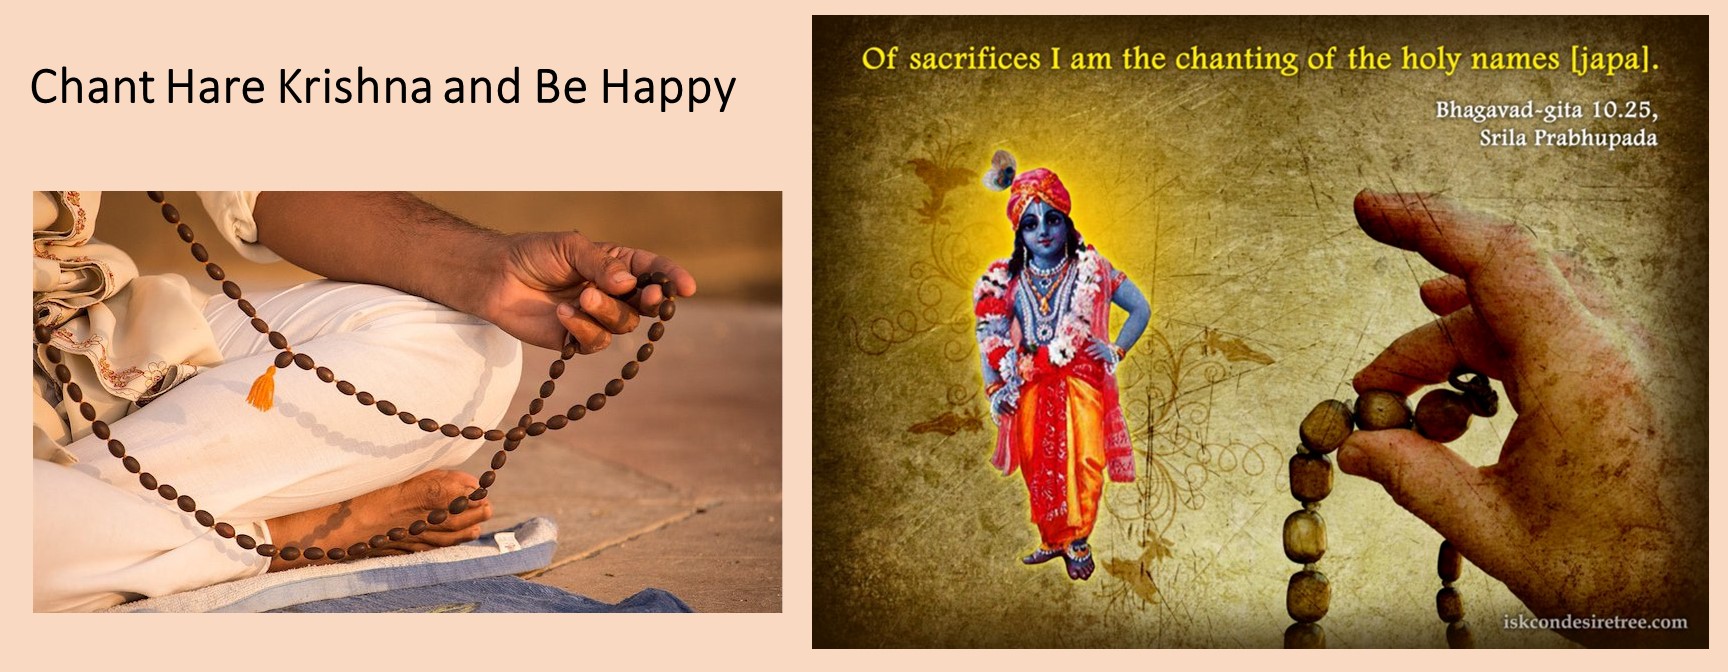 Chant the Hare Krishna Mantra